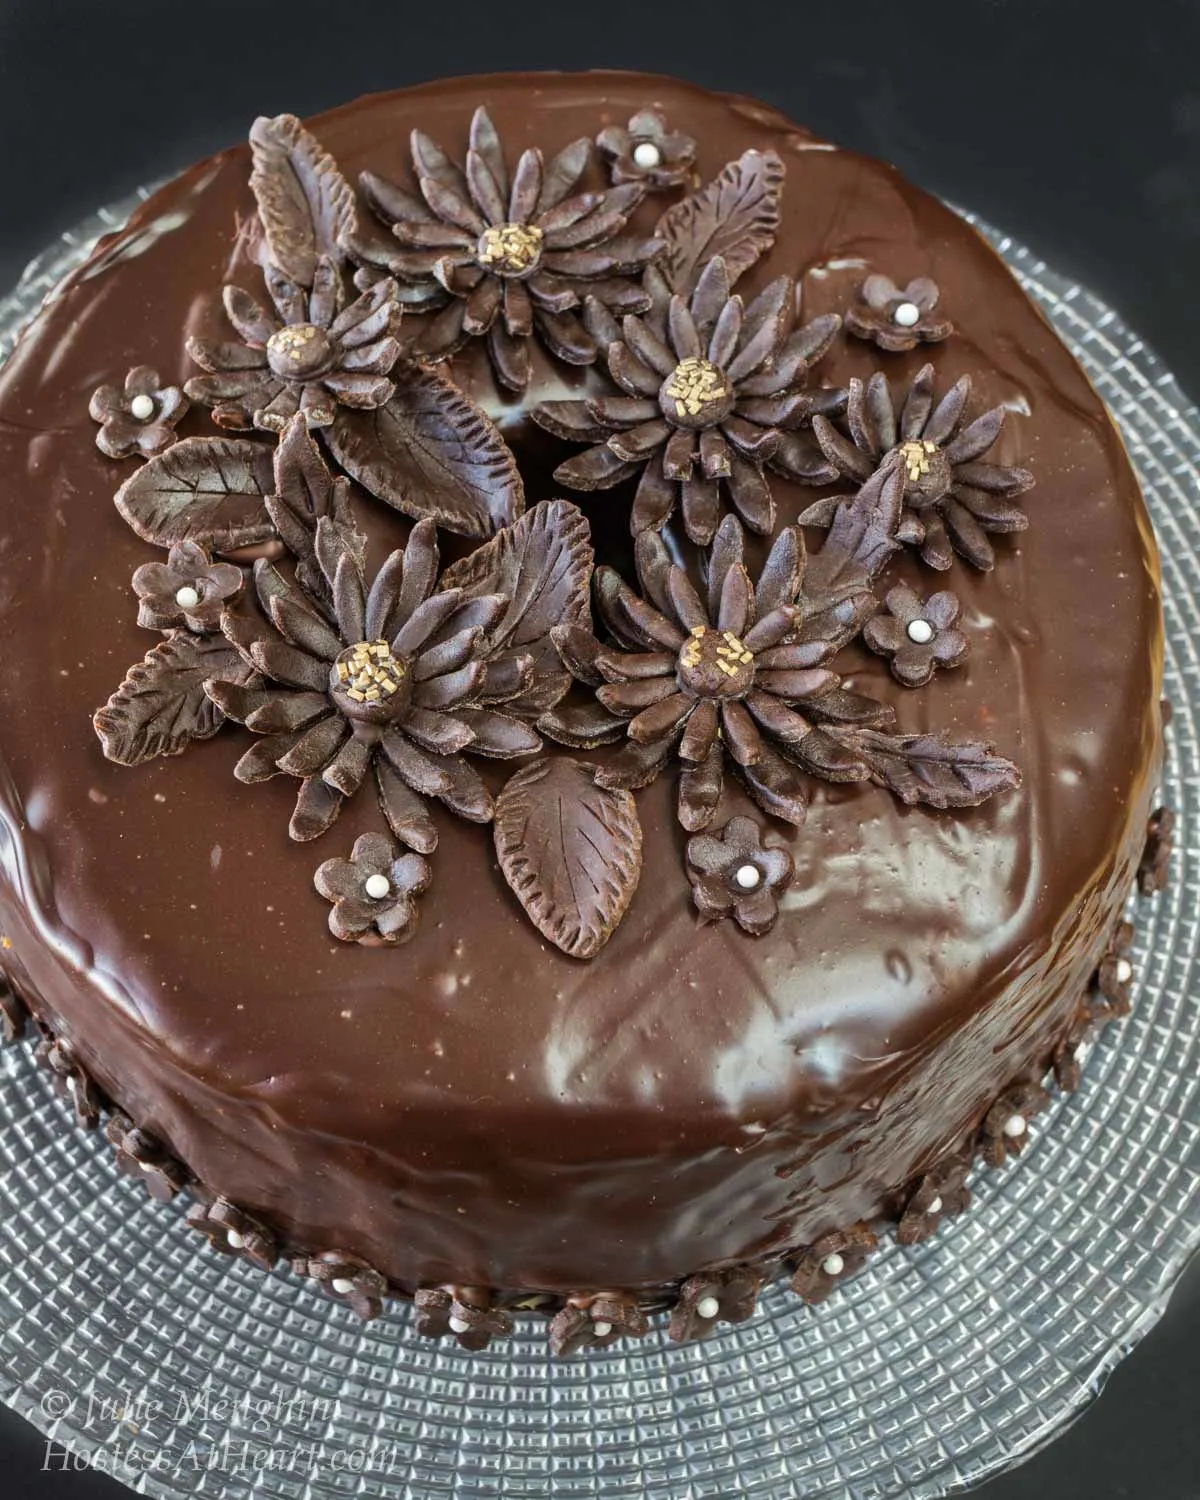 Keto Chocolate Blackout Cake (Decadent Keto Chocolate Cake!)